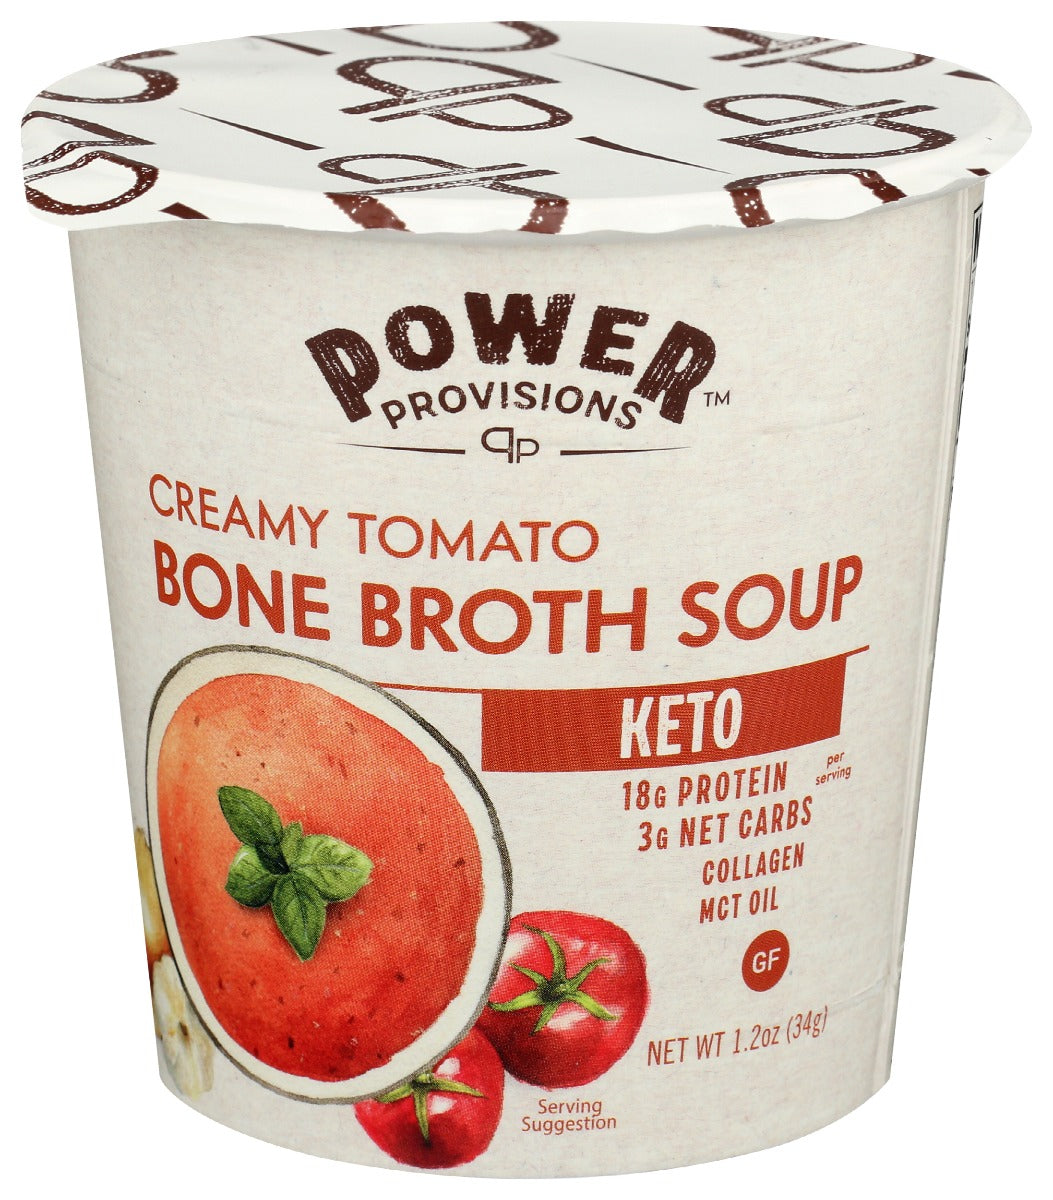 POWER PROVISIONS: Creamy Tomato Bone Broth Soup, 1.2 oz